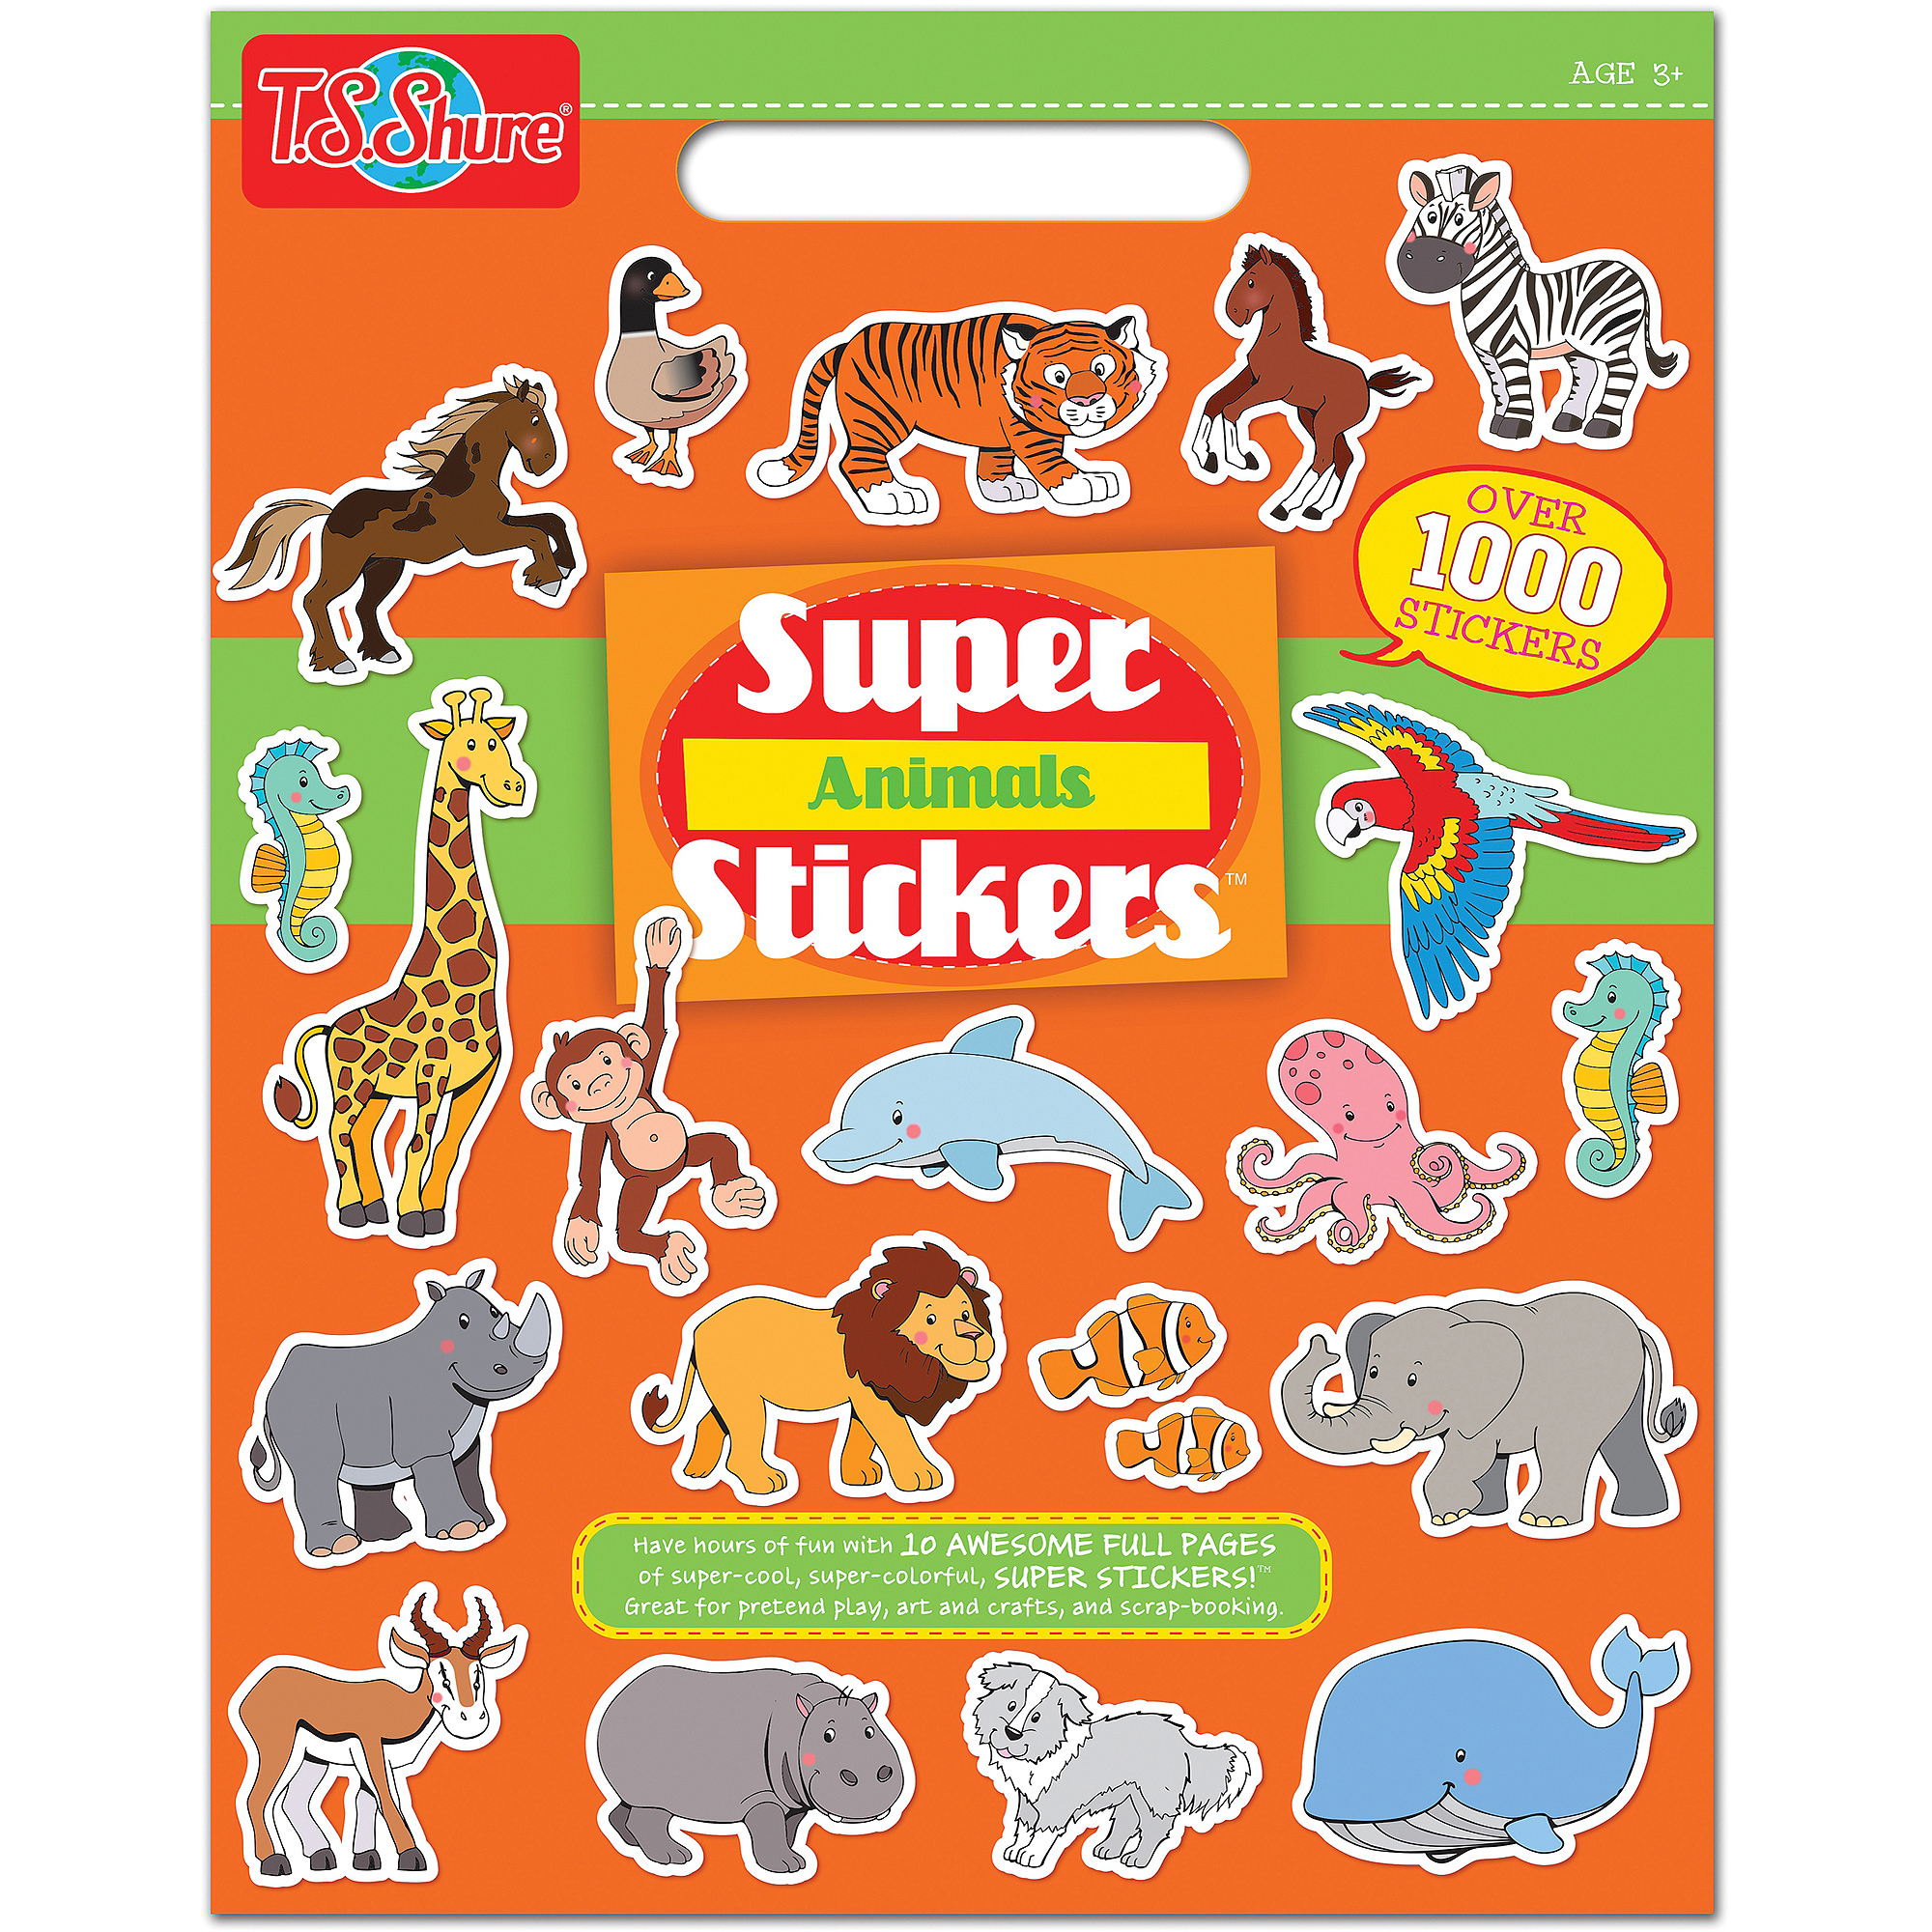 Super Sticker Assortment (1000 Stickers)